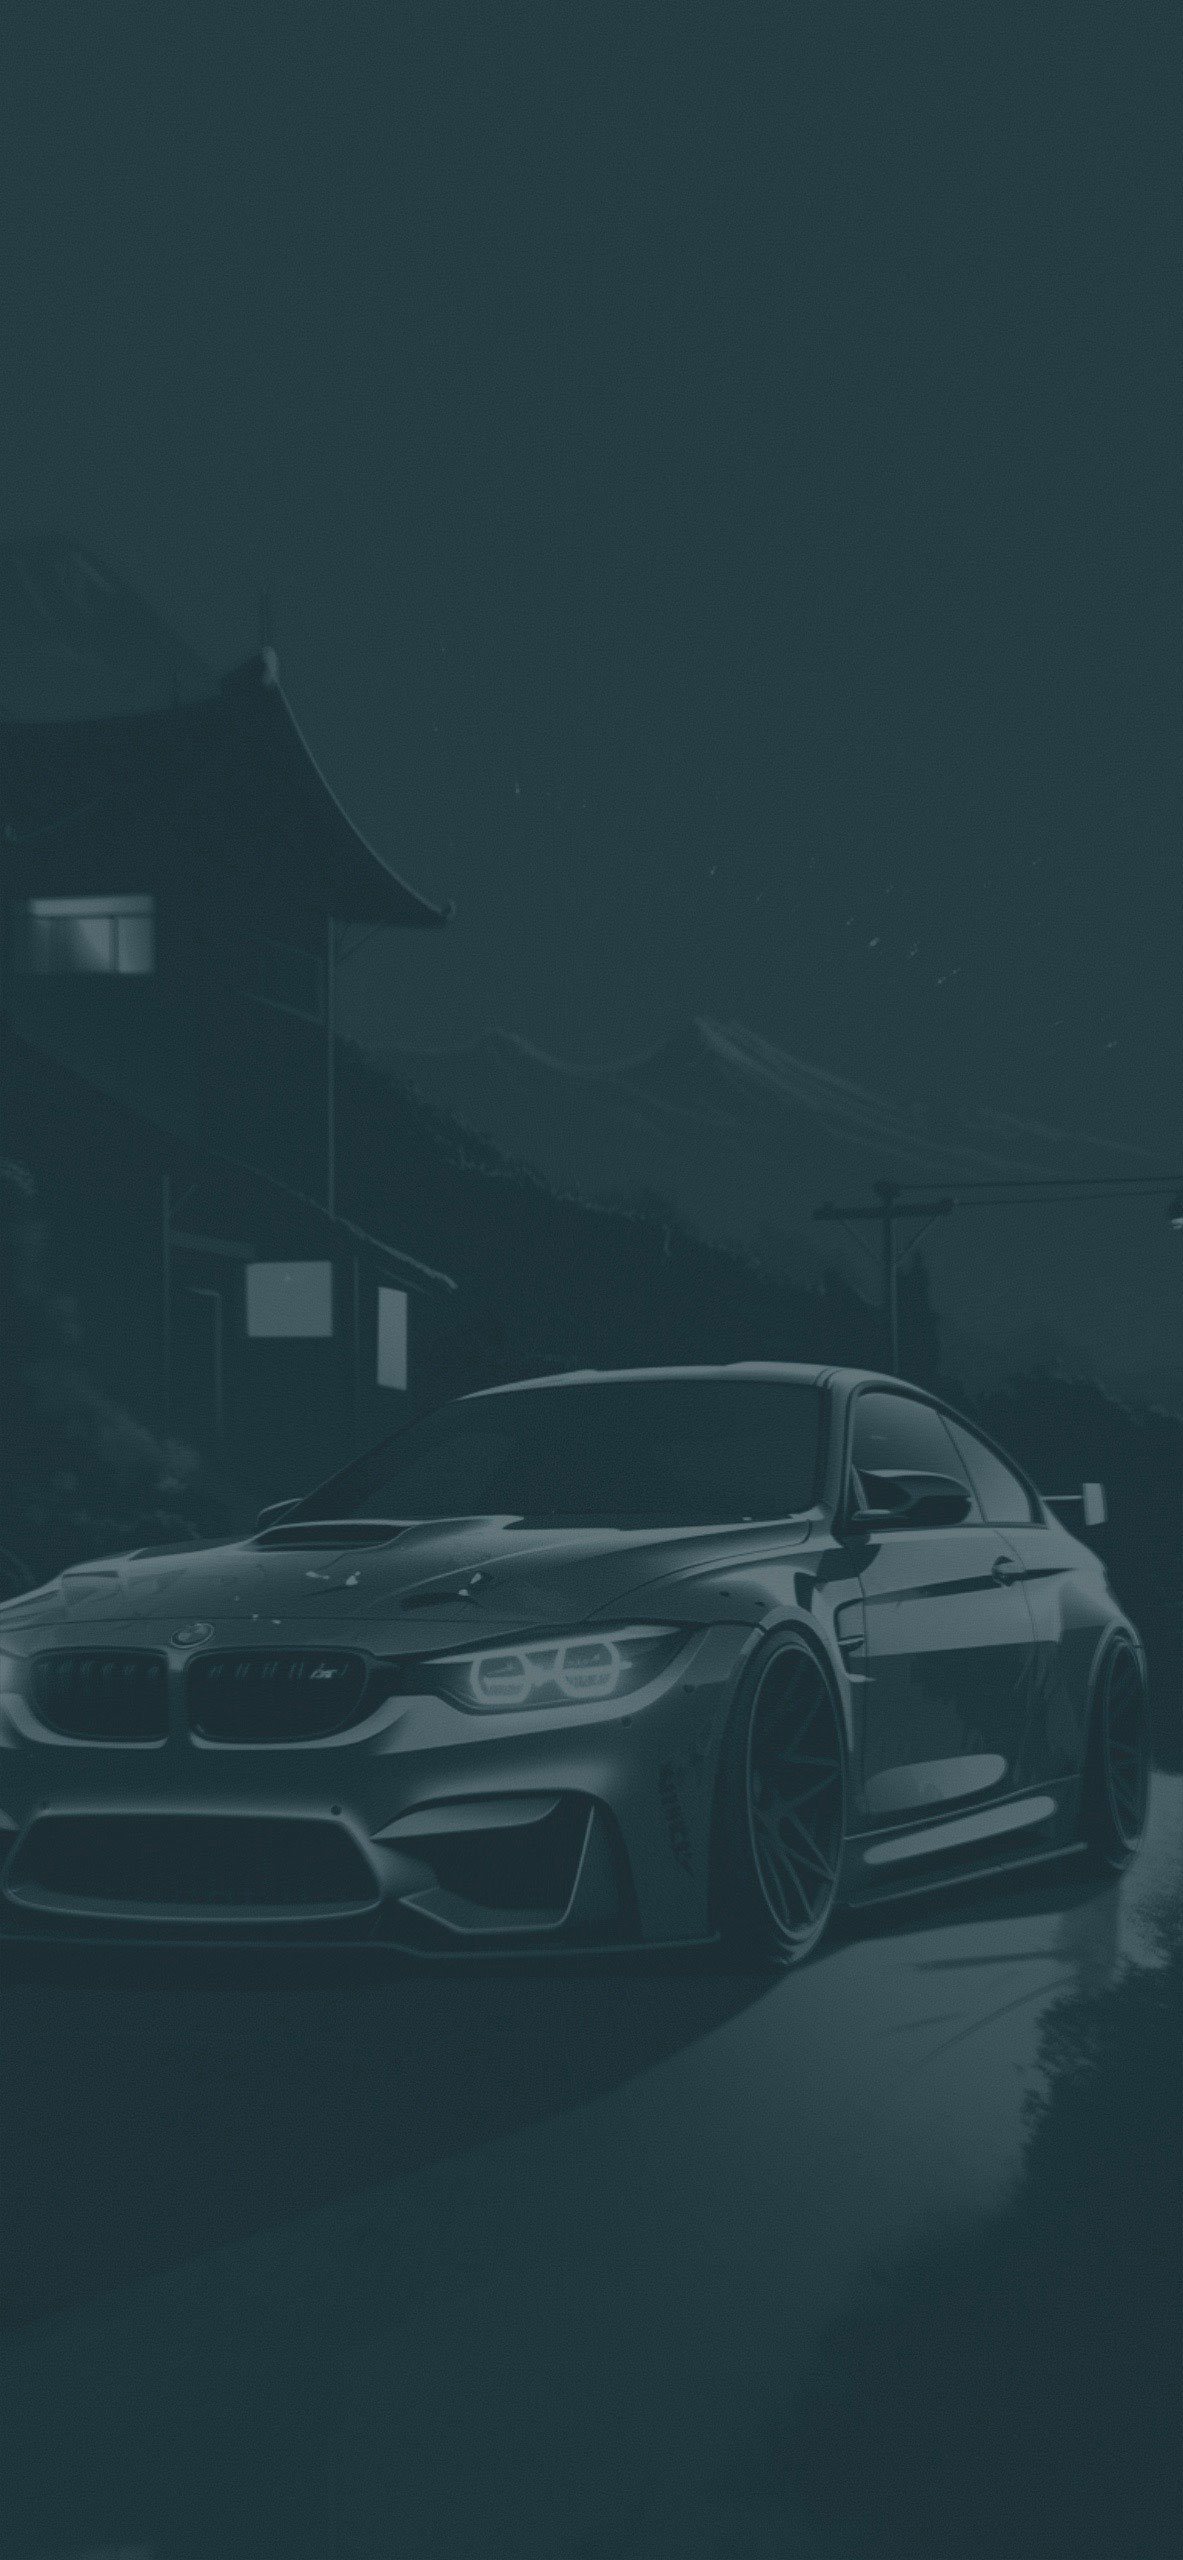 BMW M4 cool background